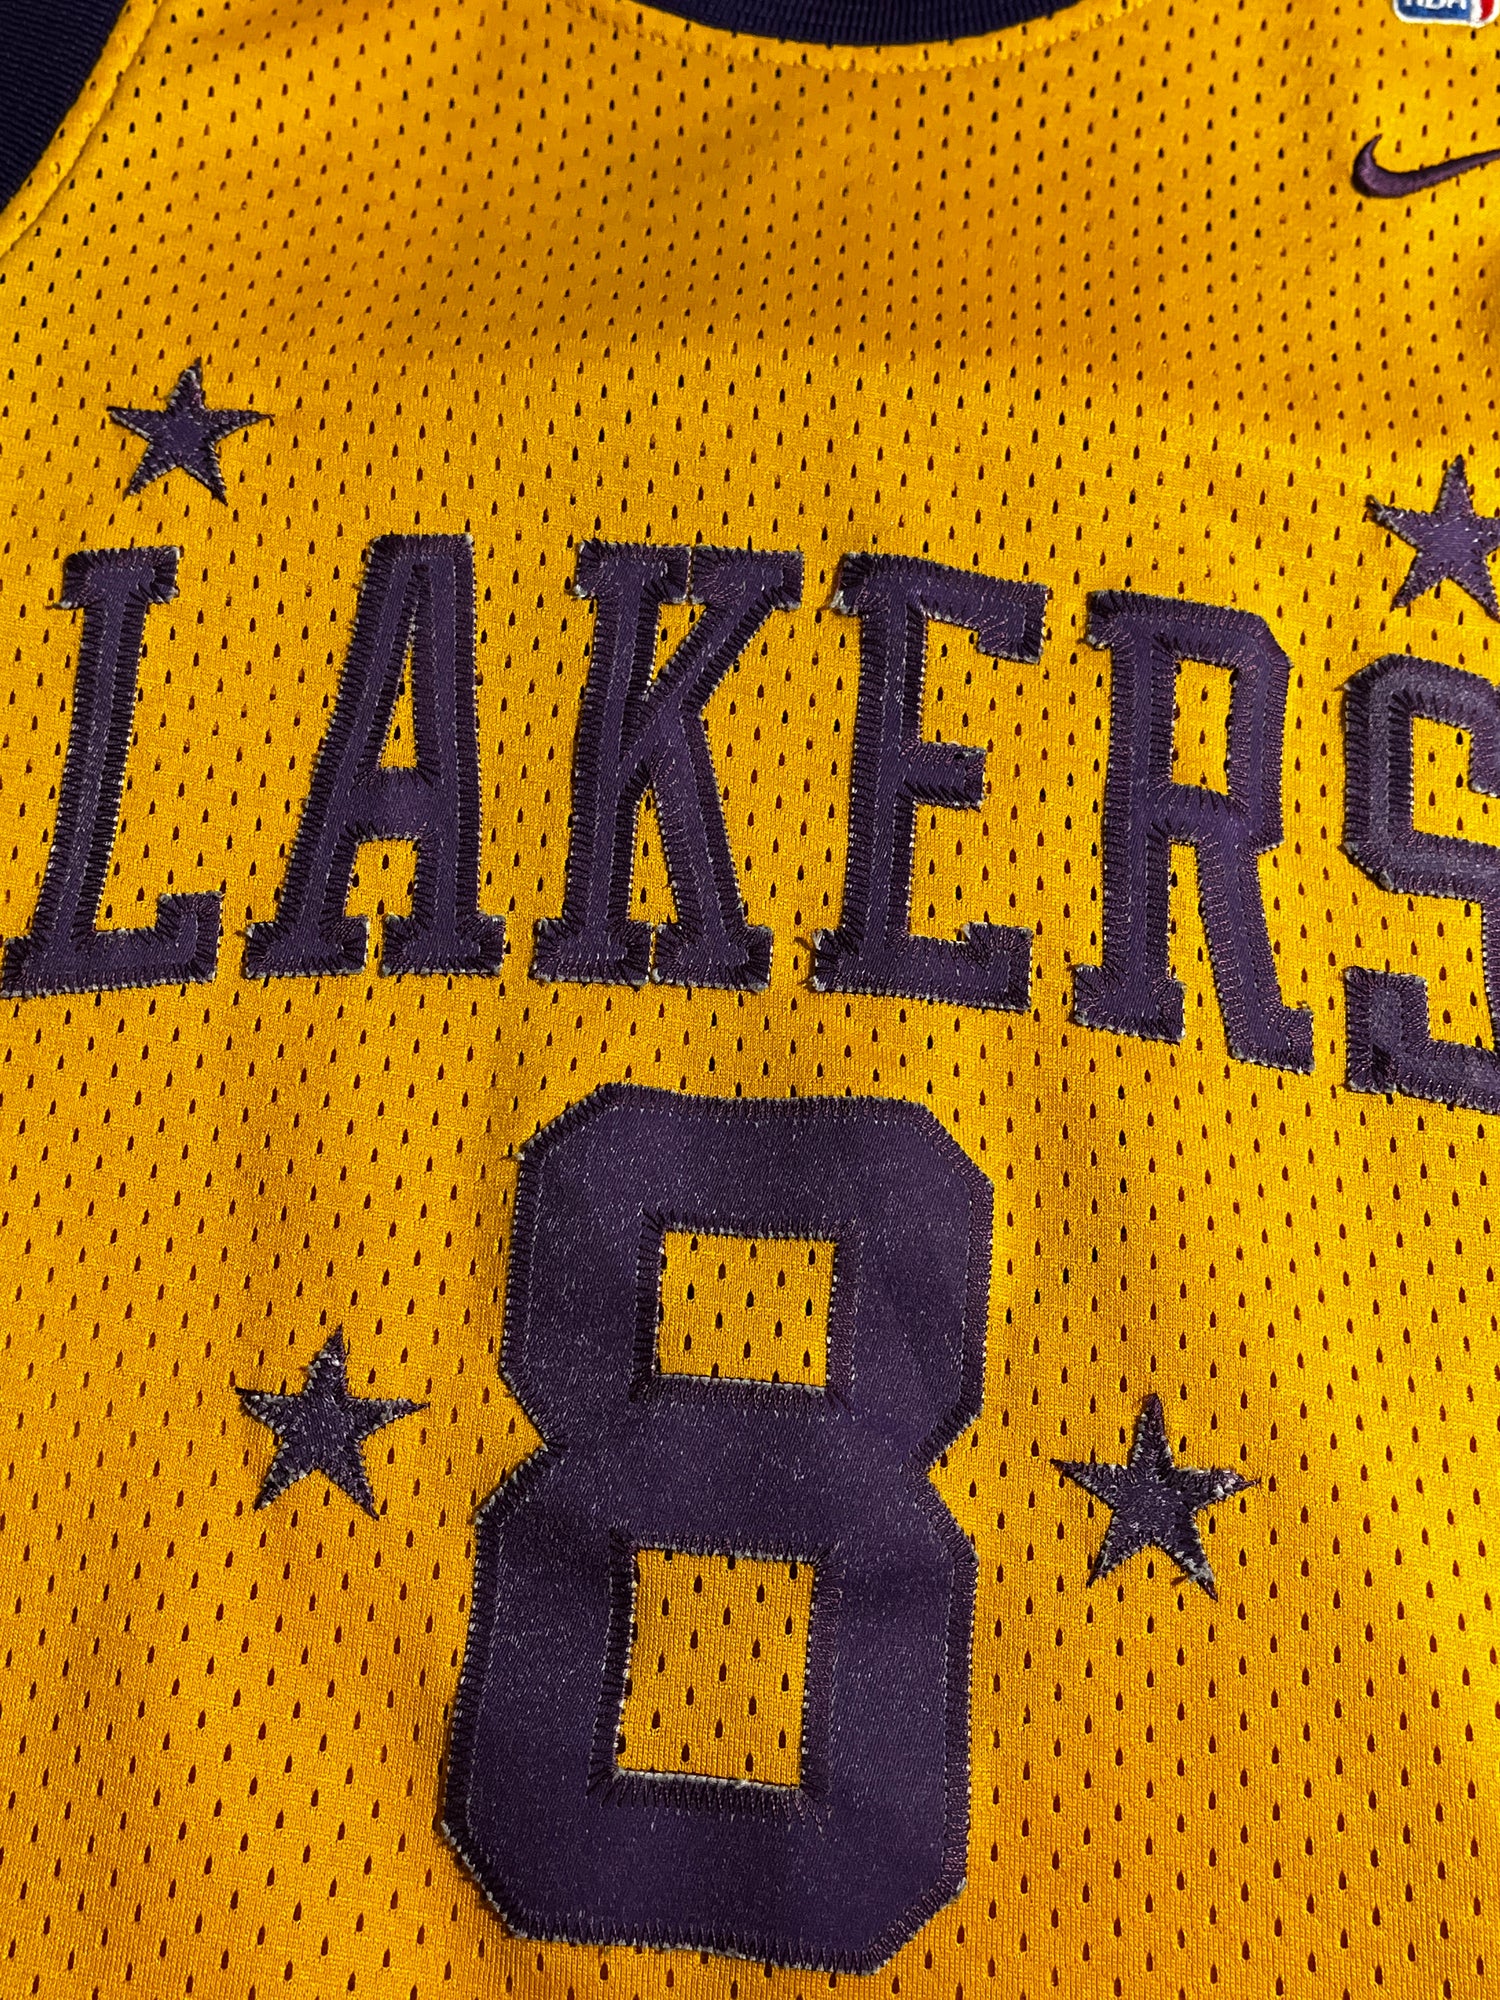 Vintage Nike Kobe Bryant MPLS Lakers Swingman Jersey